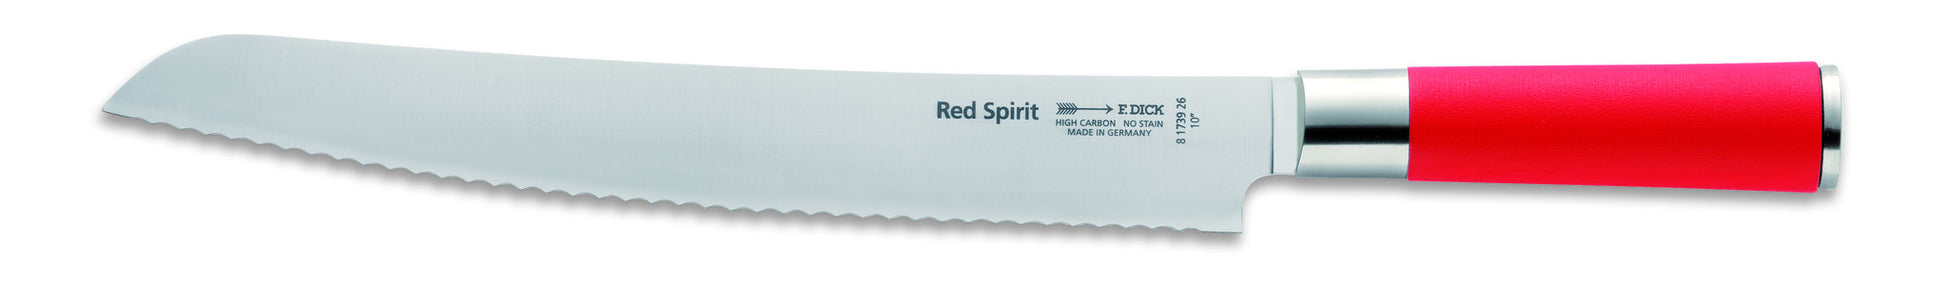 Red Spirit 26cm serrated Utility knife -81739-26 - CulinaryKraft